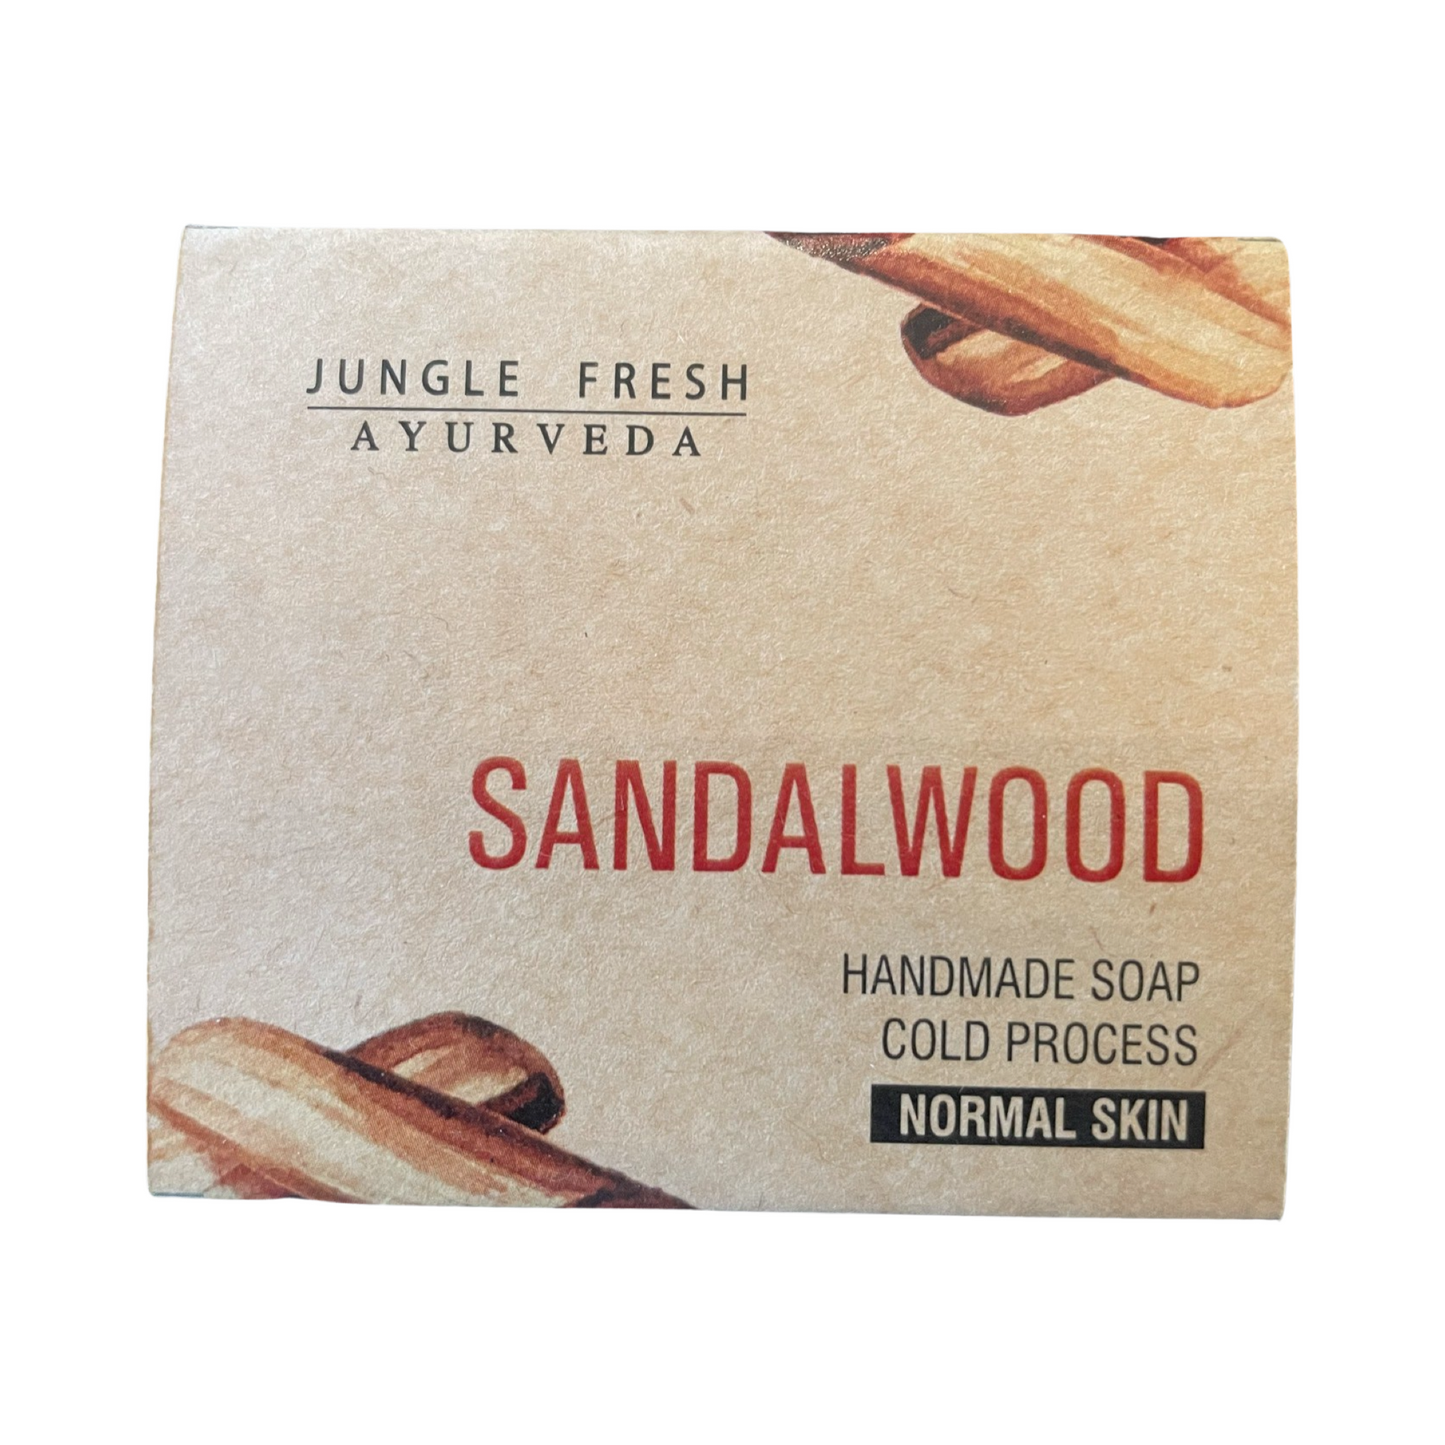 SANDALWOOD håndsæbe fra Jungle Fresh (normal skin)